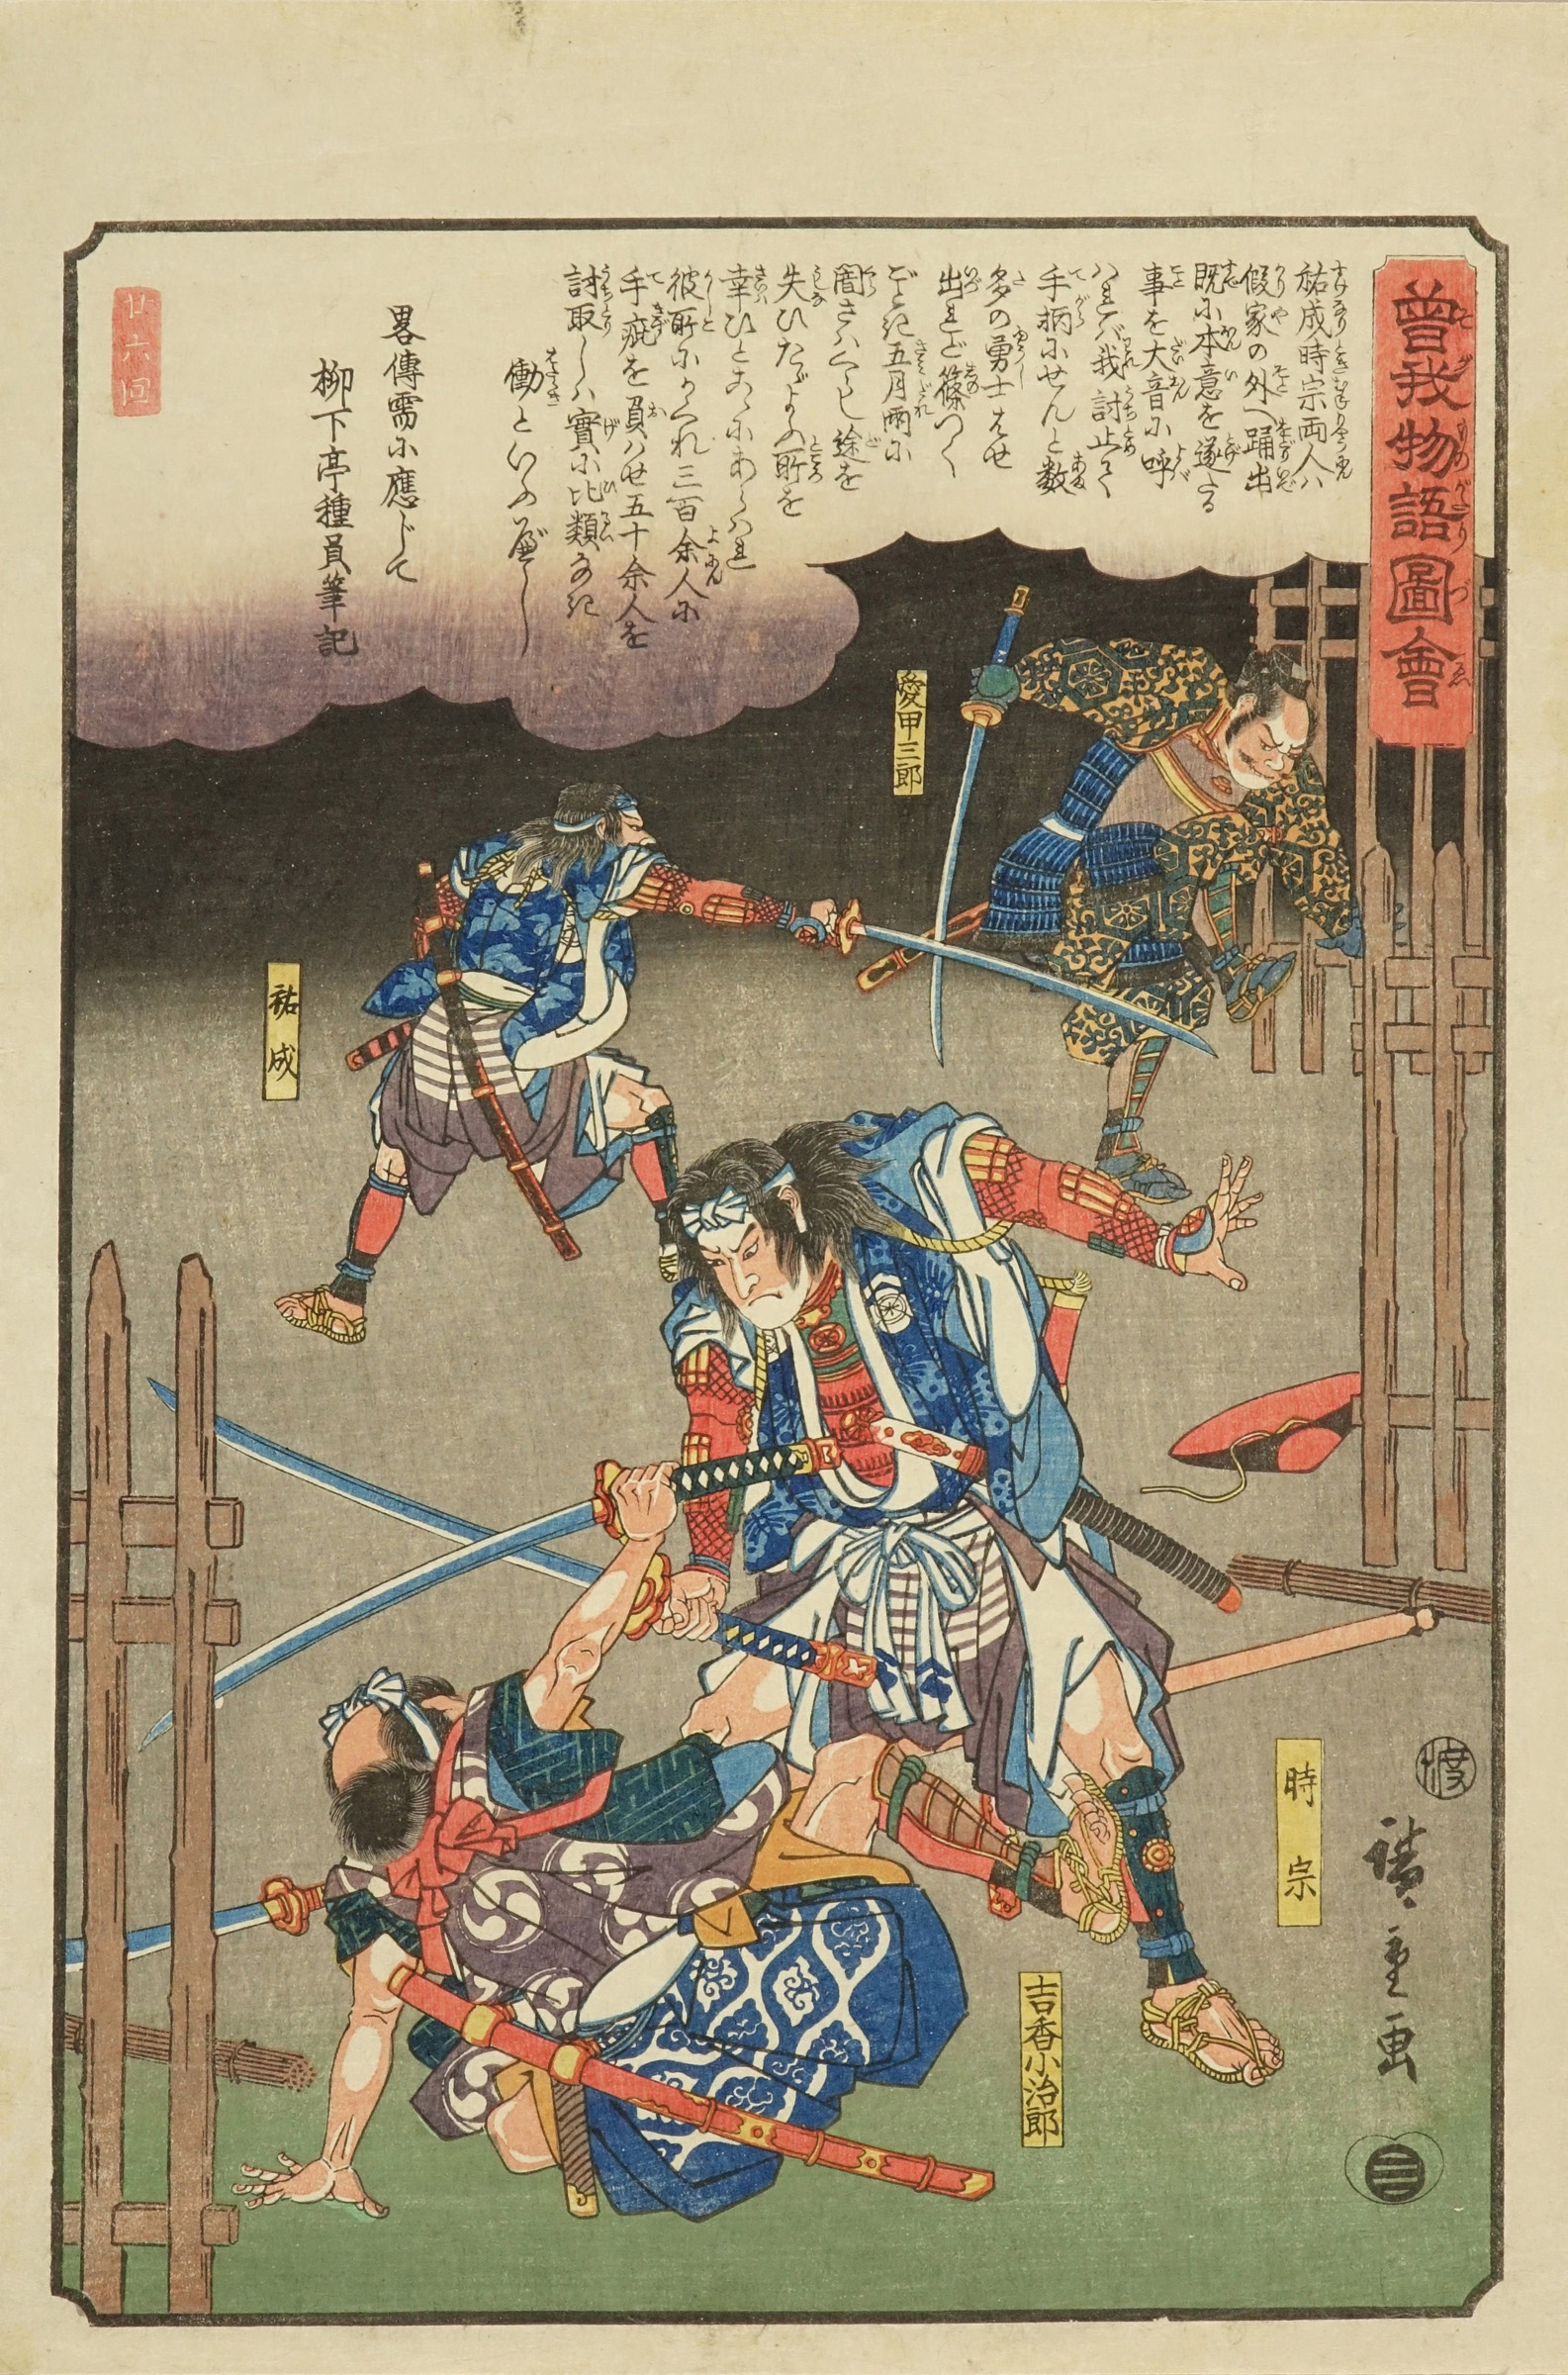 HIROSHIGE Soga monogatari zue (Pictures of the tale of Soga Brothers), Japanese Ukiyo-e Prints